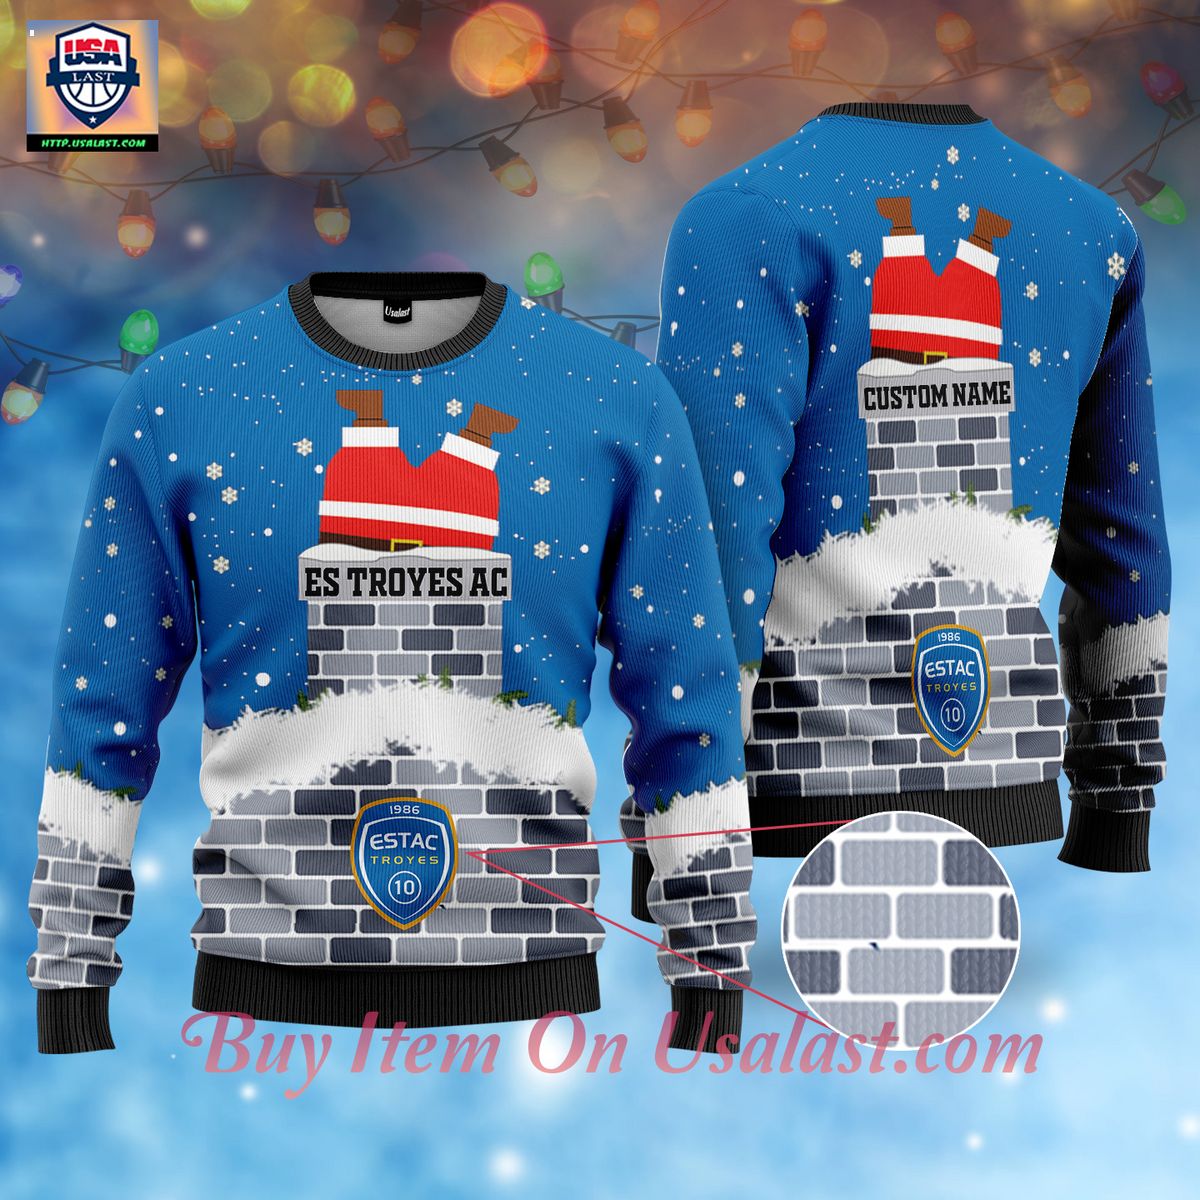 ES Troyes AC Santa Claus Custom Name Ugly Christmas Sweater - Cool look bro